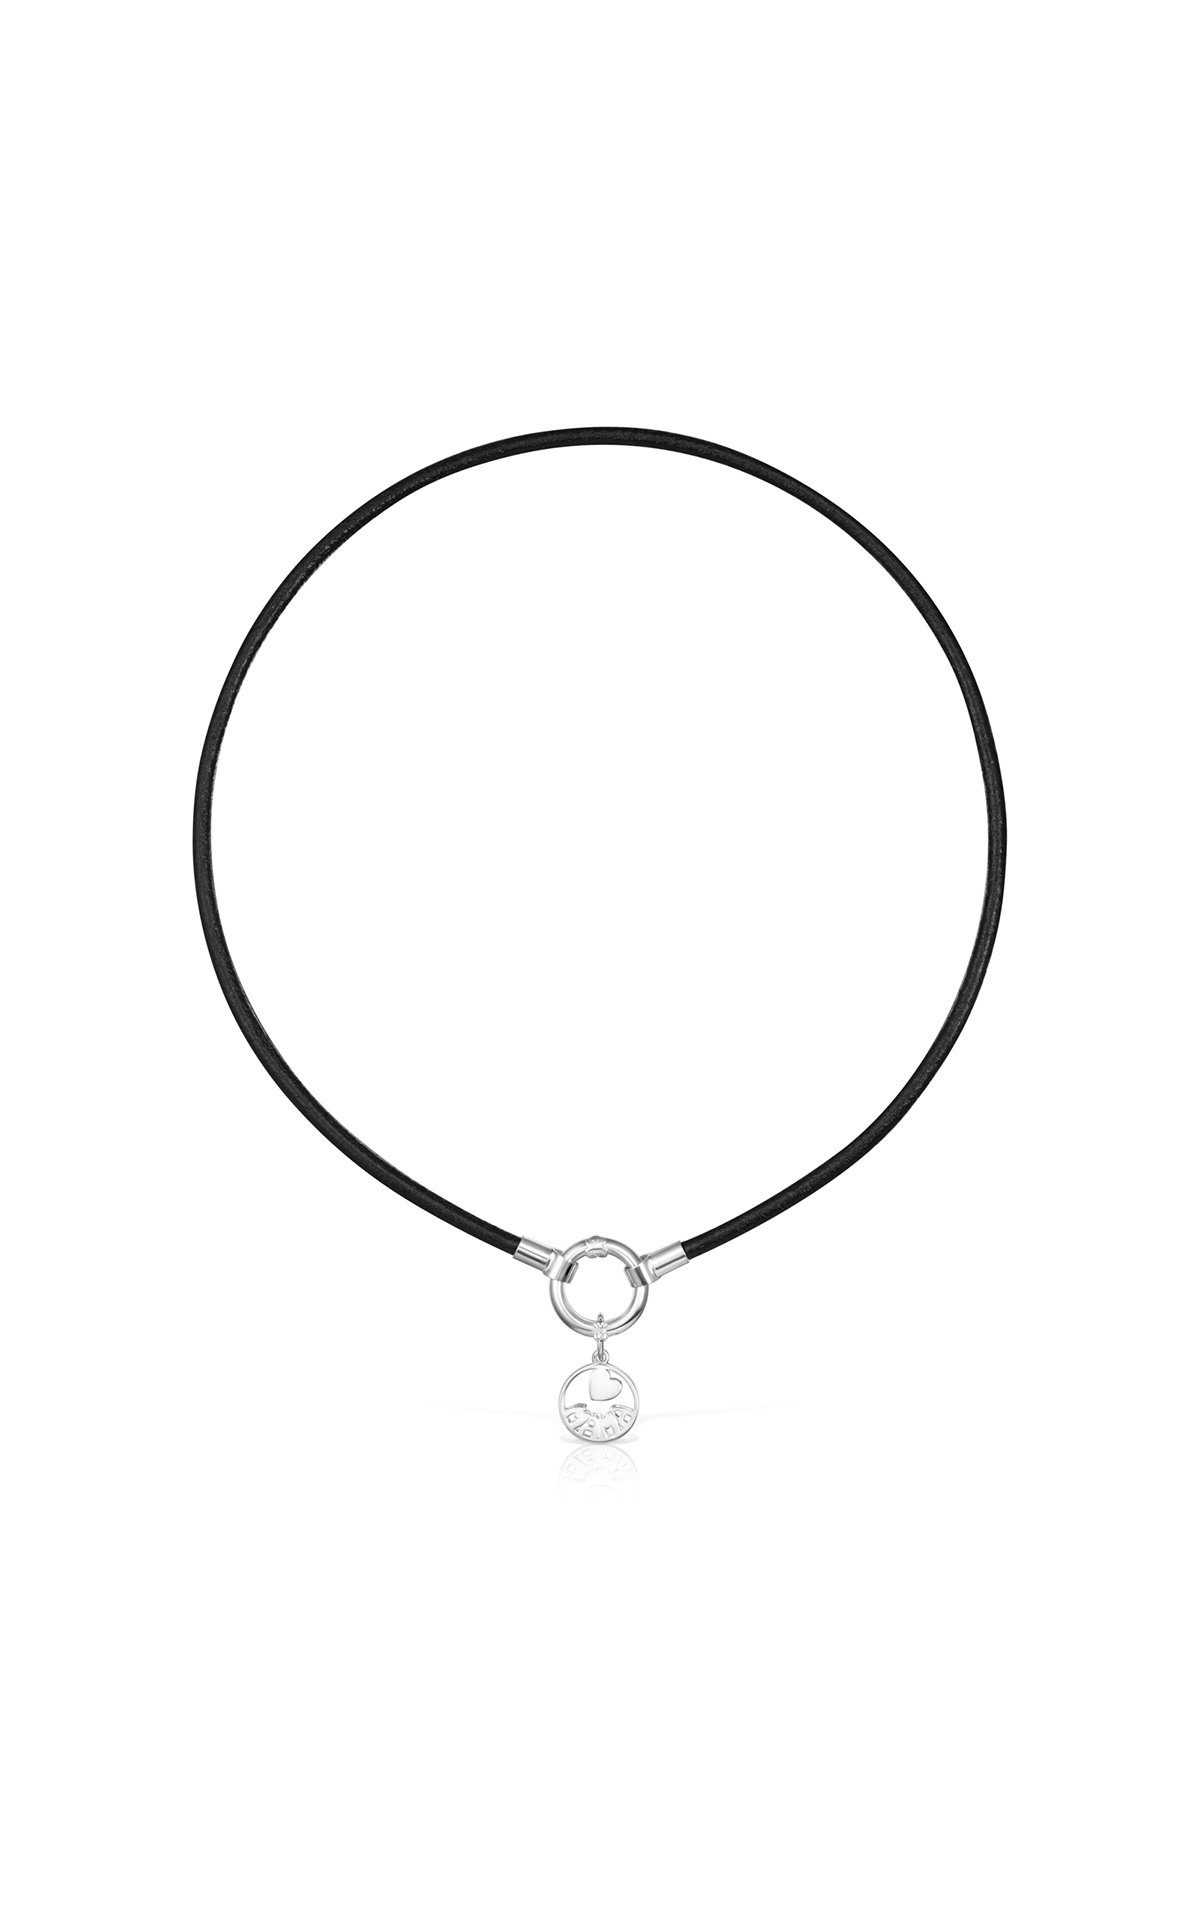 Black necklace with silver Tous pendant